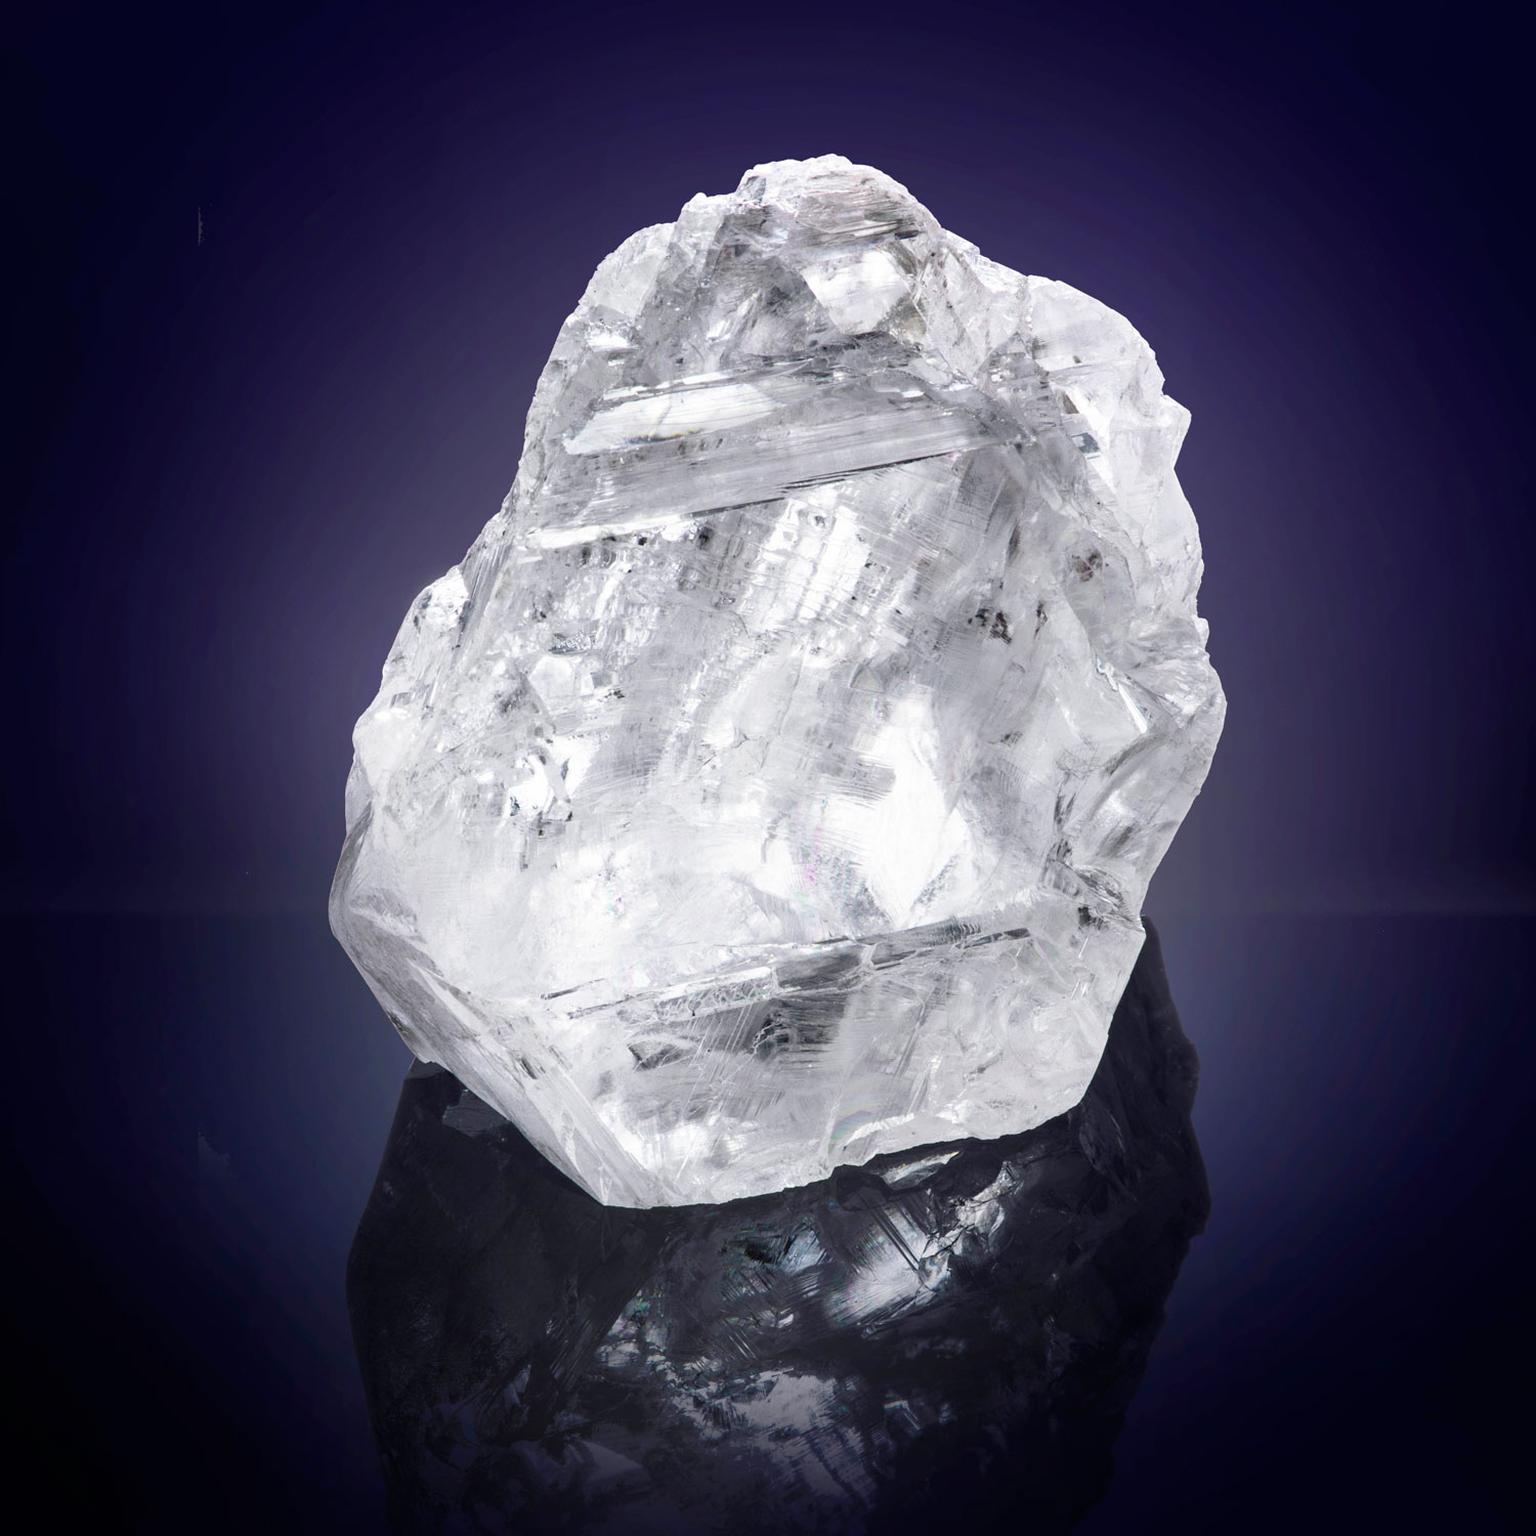 1109 carat Lesedi la Rona rough diamond